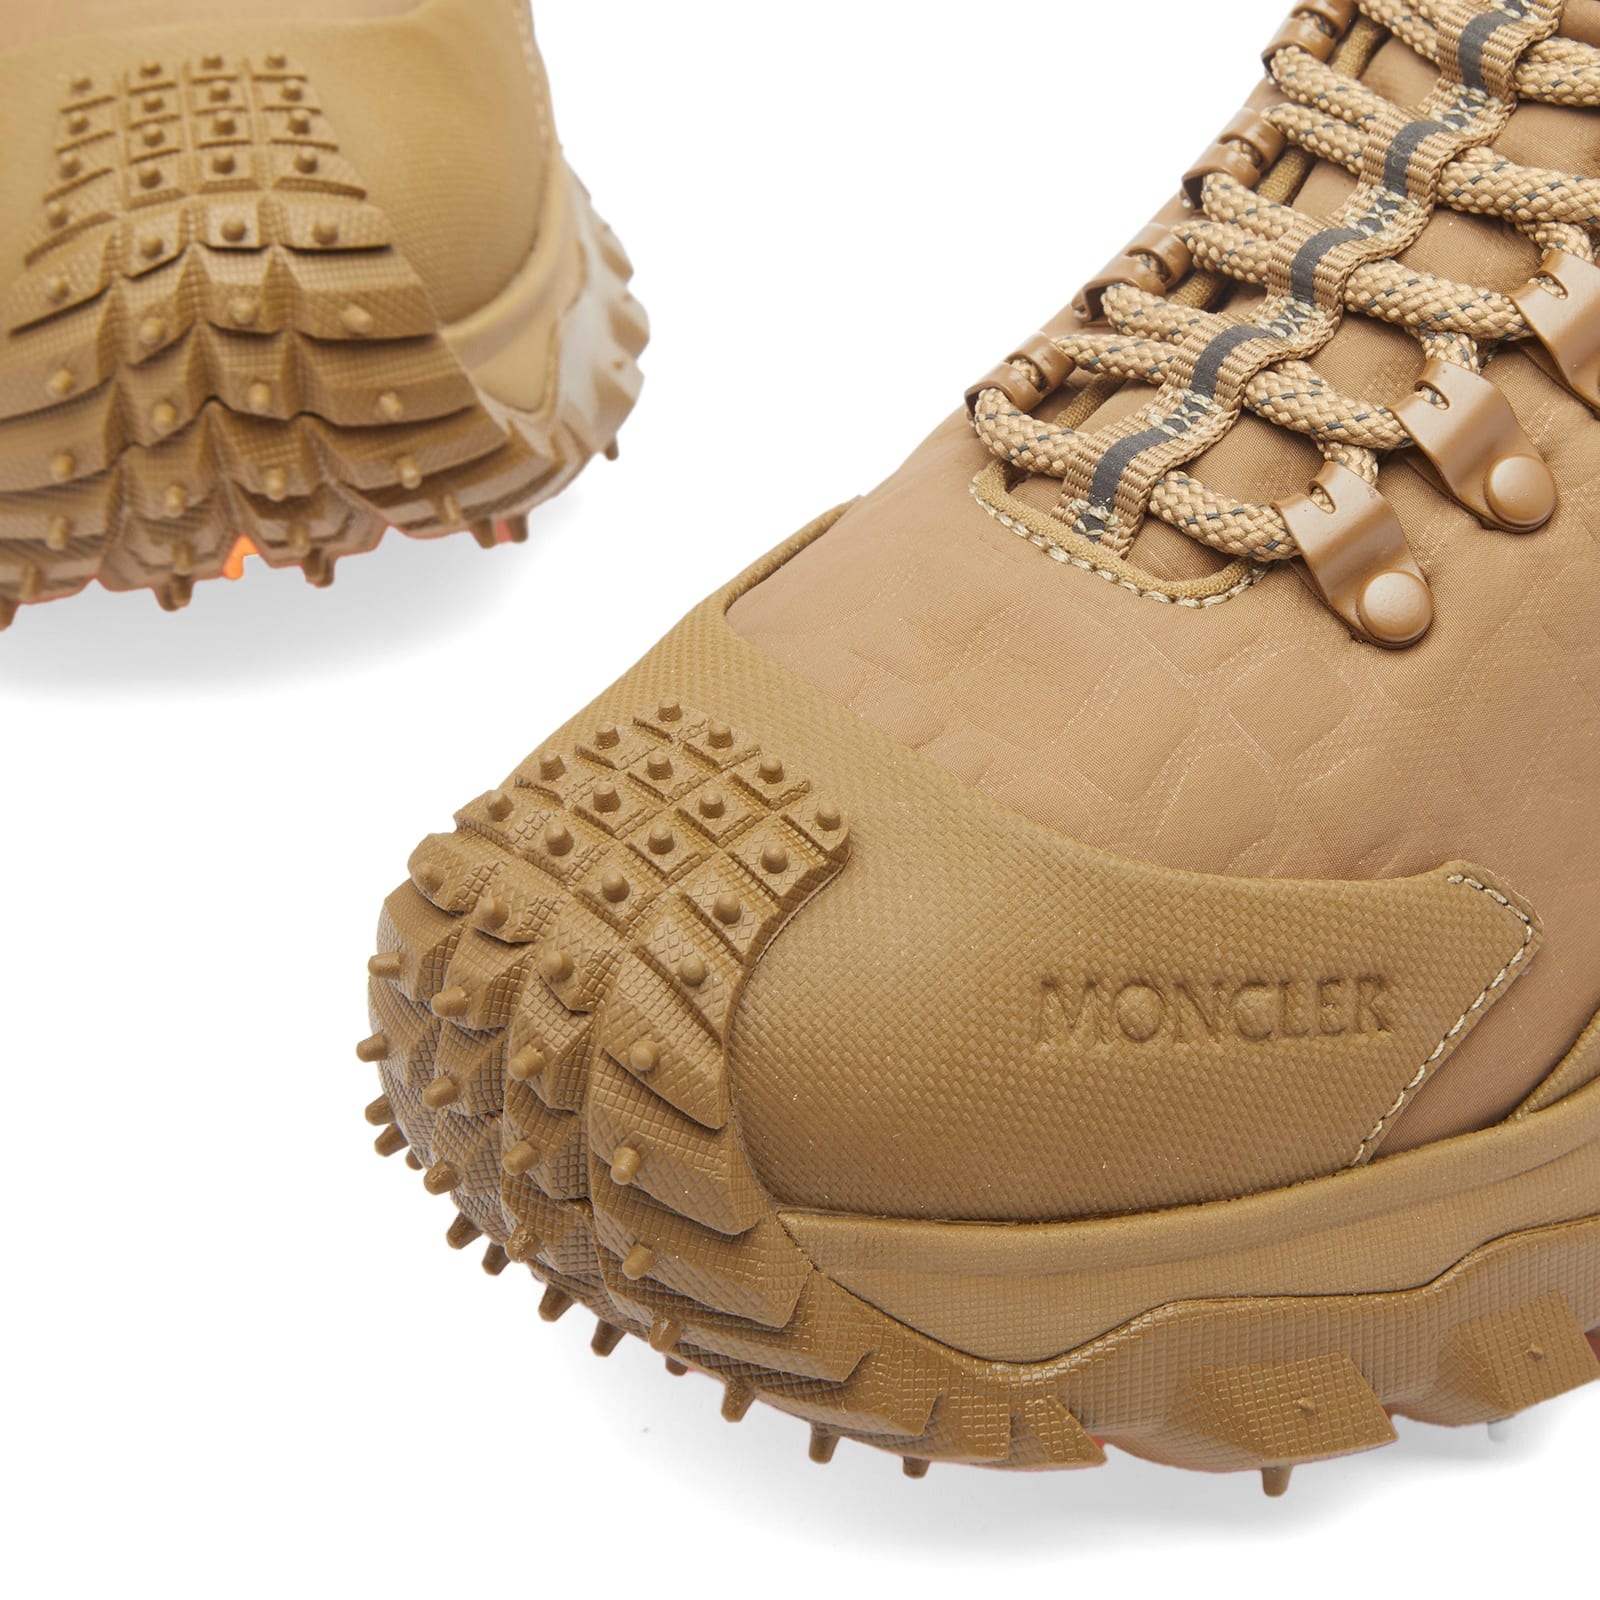 Moncler Genius x Roc Nation Trailgrip Low Top Sneakers - 3